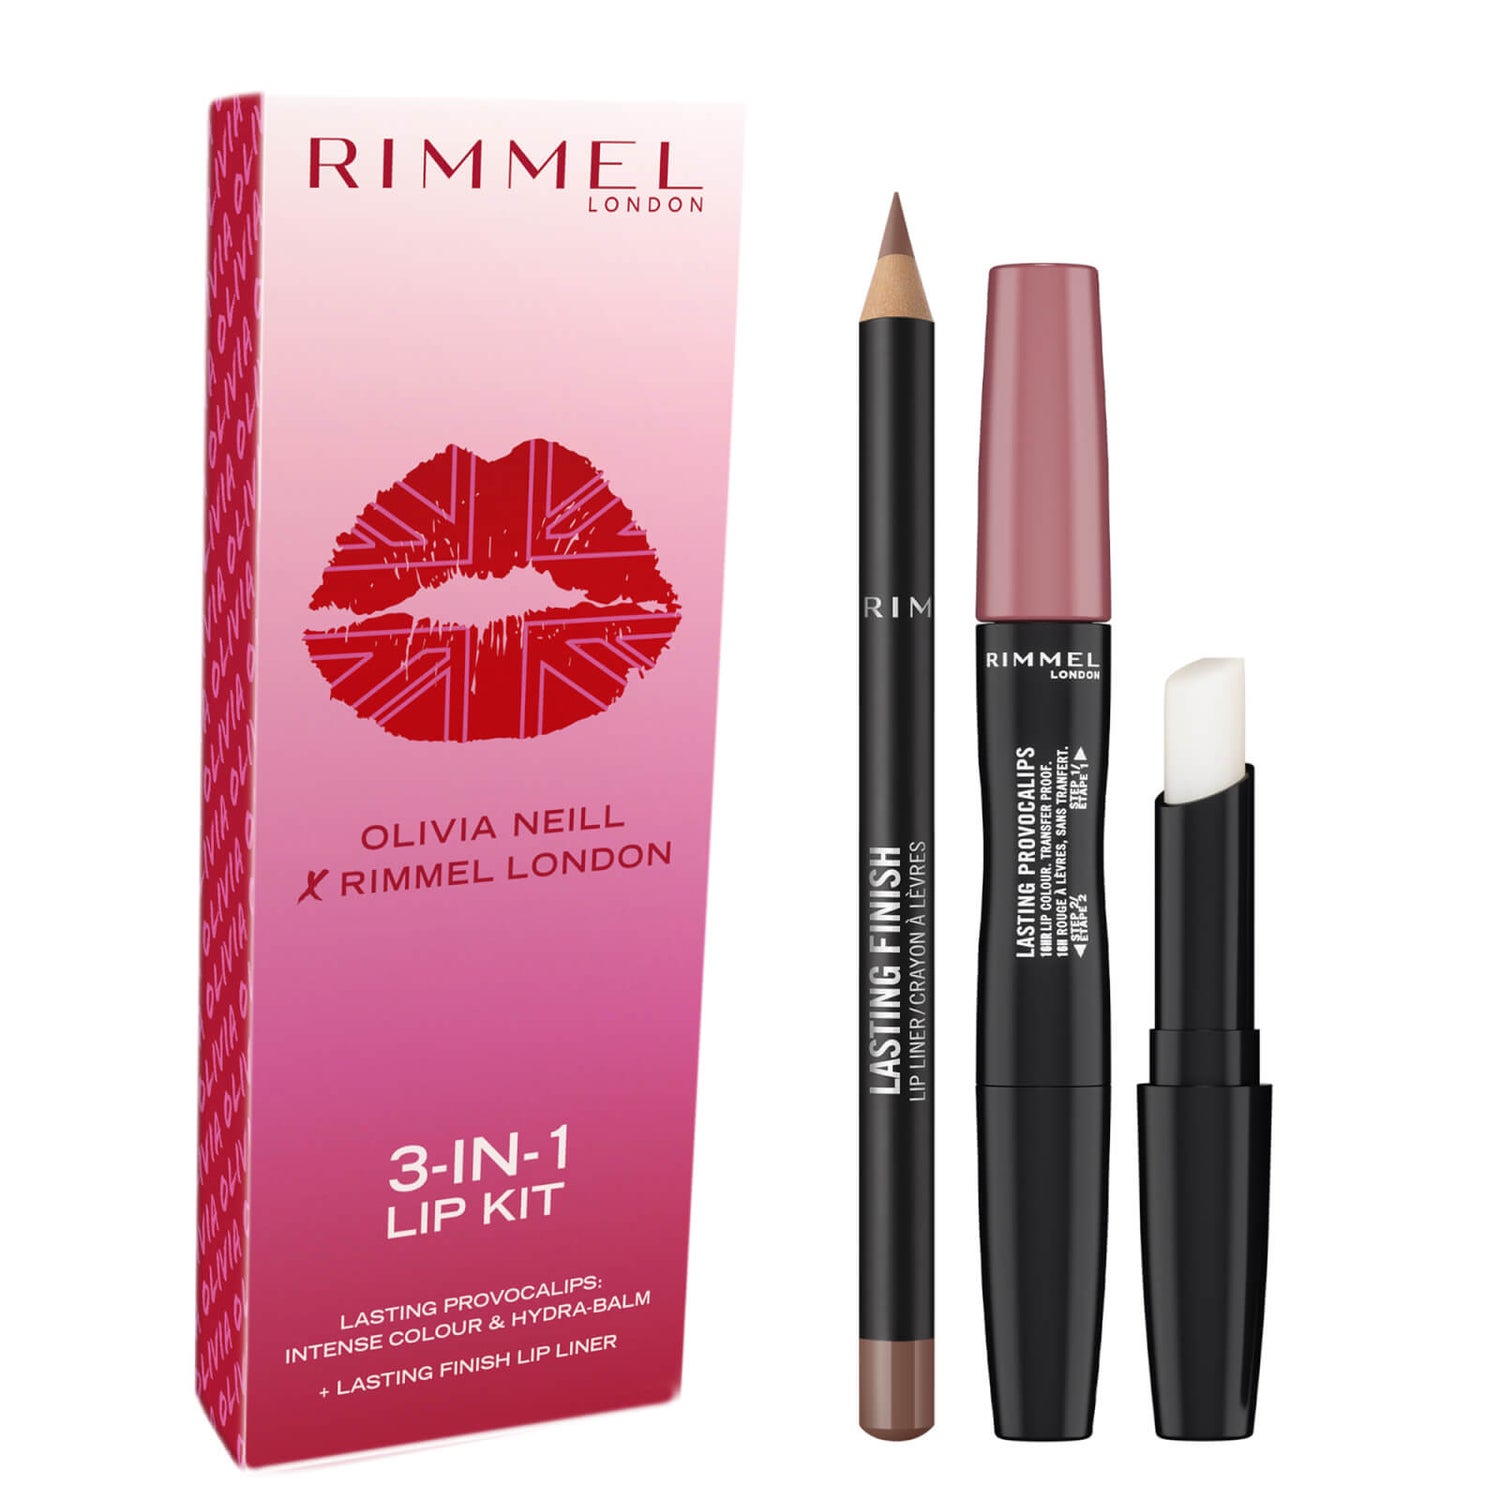 Rimmel London x Olivia Neill Exclusive Lip Kit - Nude (Worth £13.98)